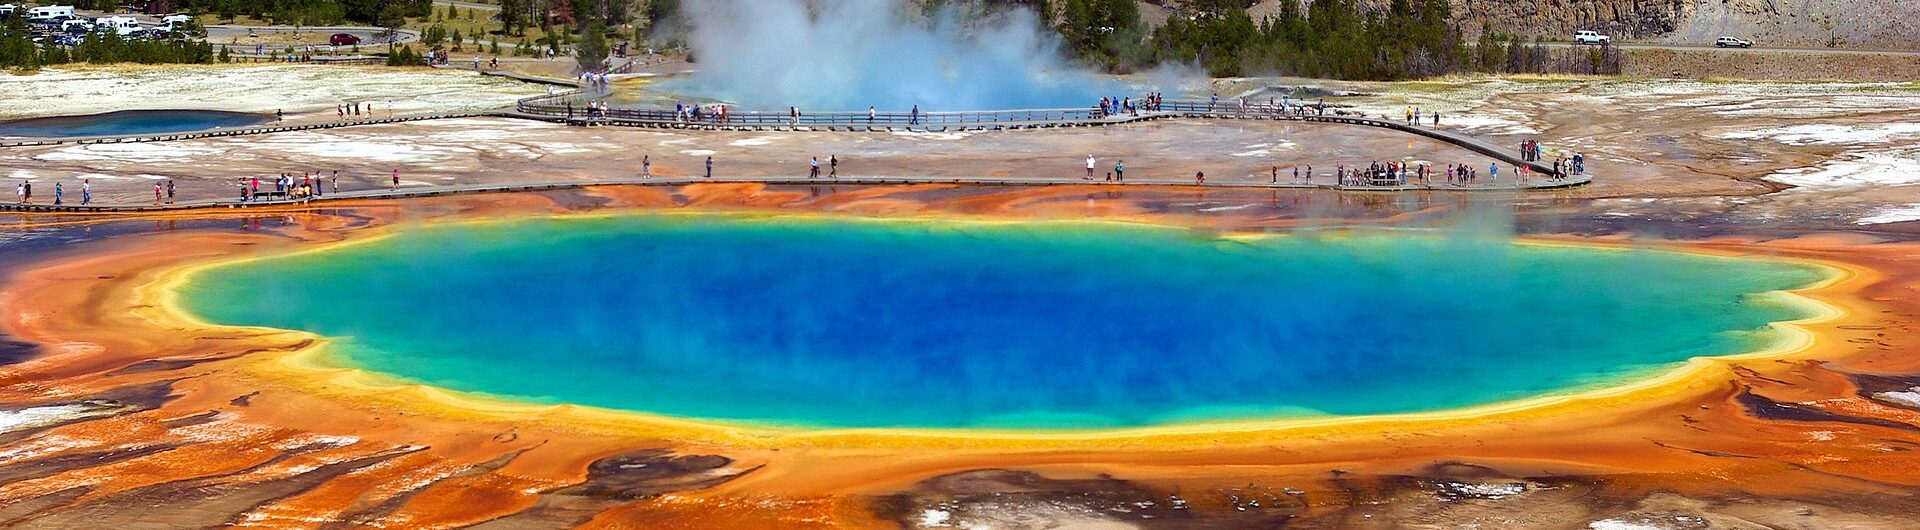 Yellowstone-grand-prismatic-spring